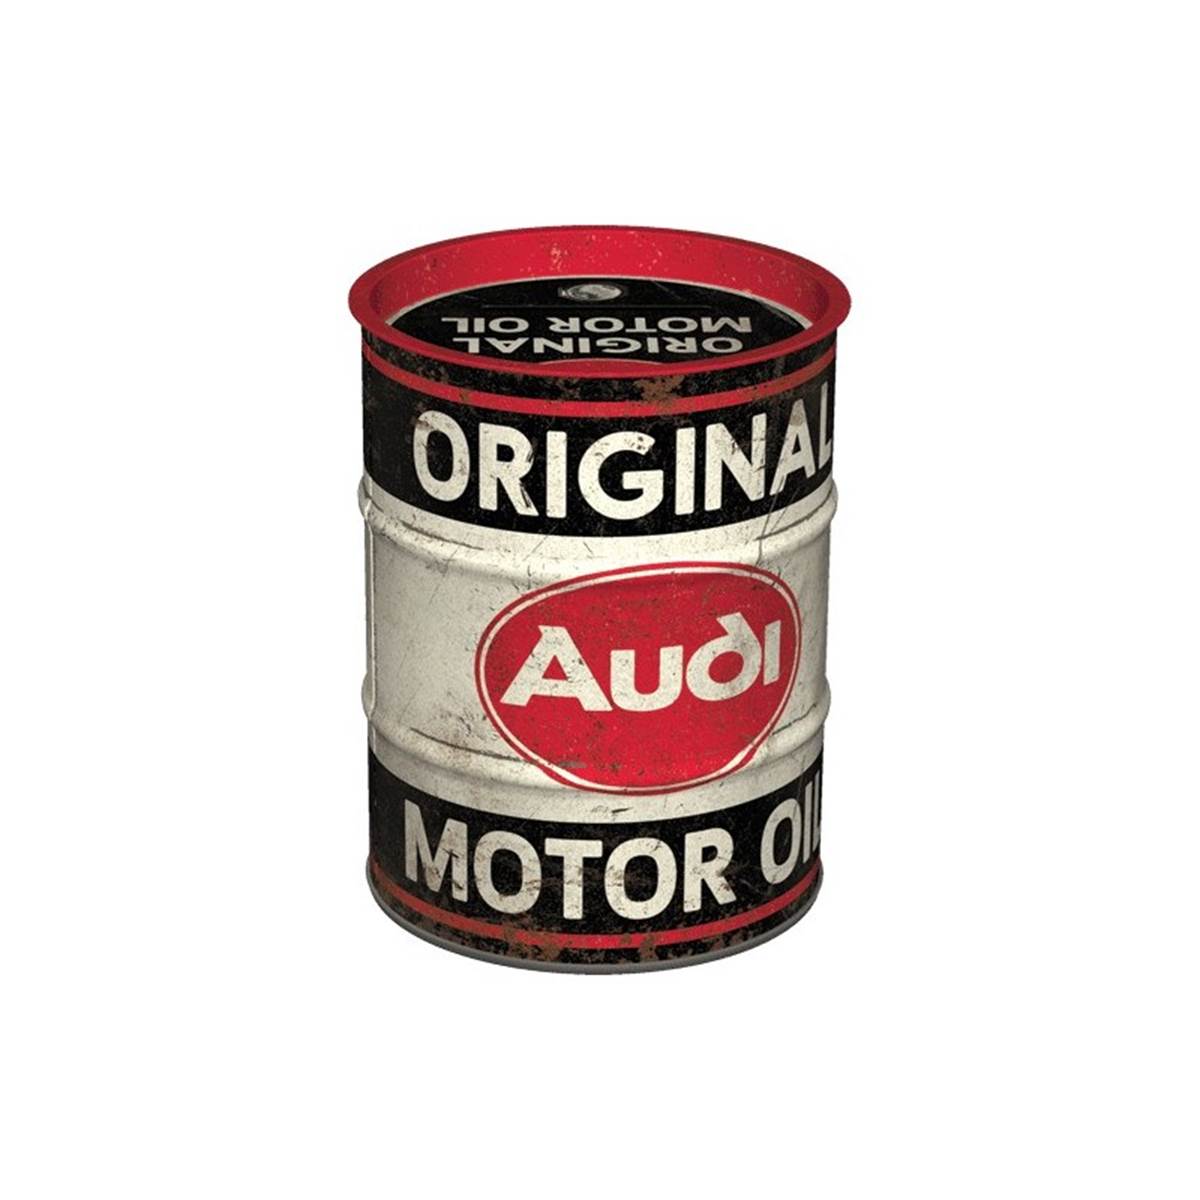 Tirelire Baril Audi Original Motor Oil